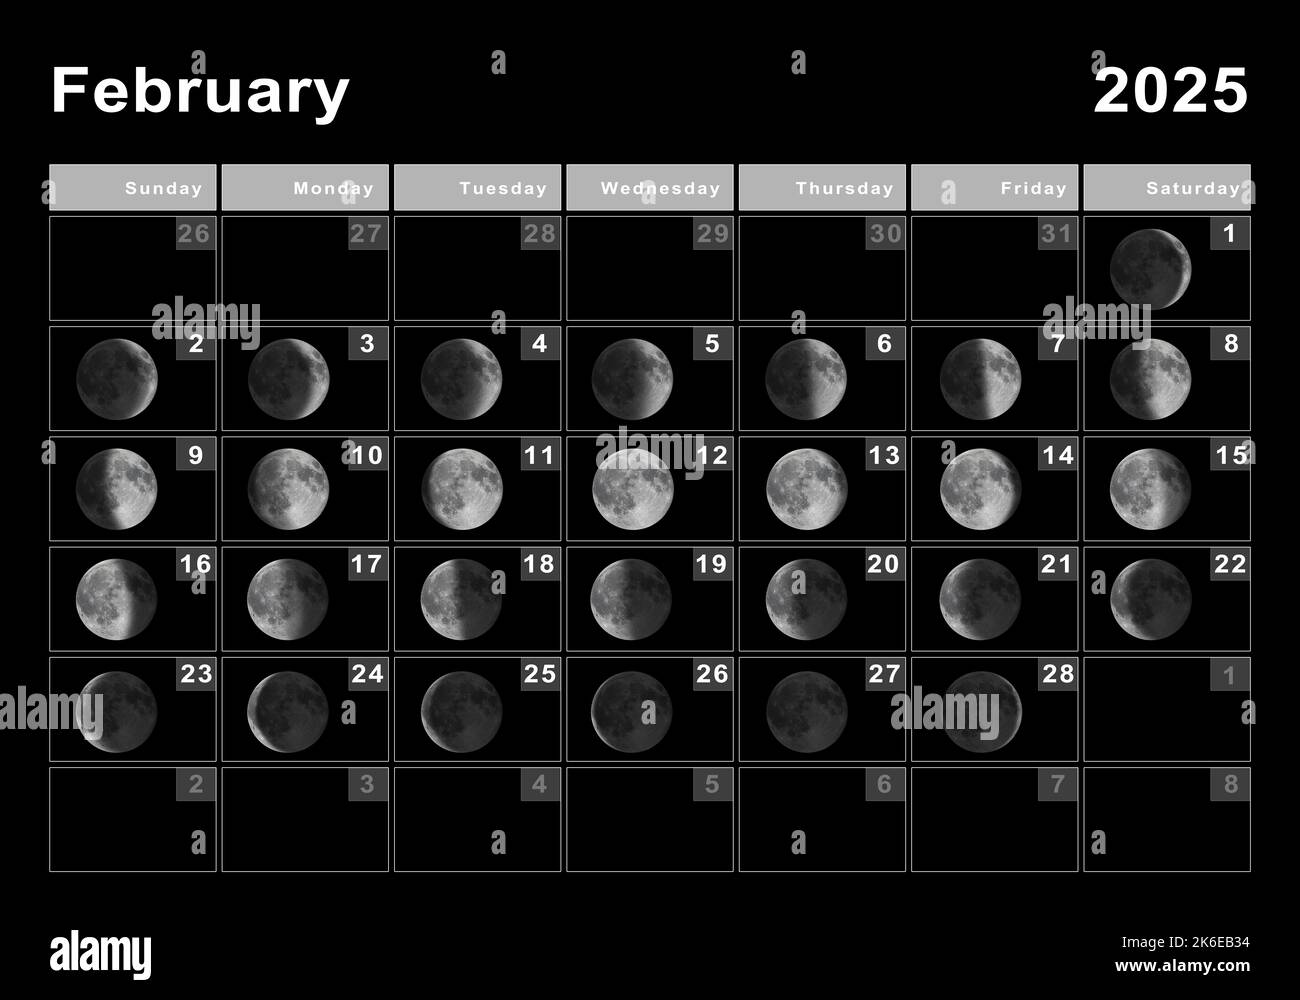 February 2025 Lunar calendar, Moon cycles, Moon Phases Stock Photo - Alamy